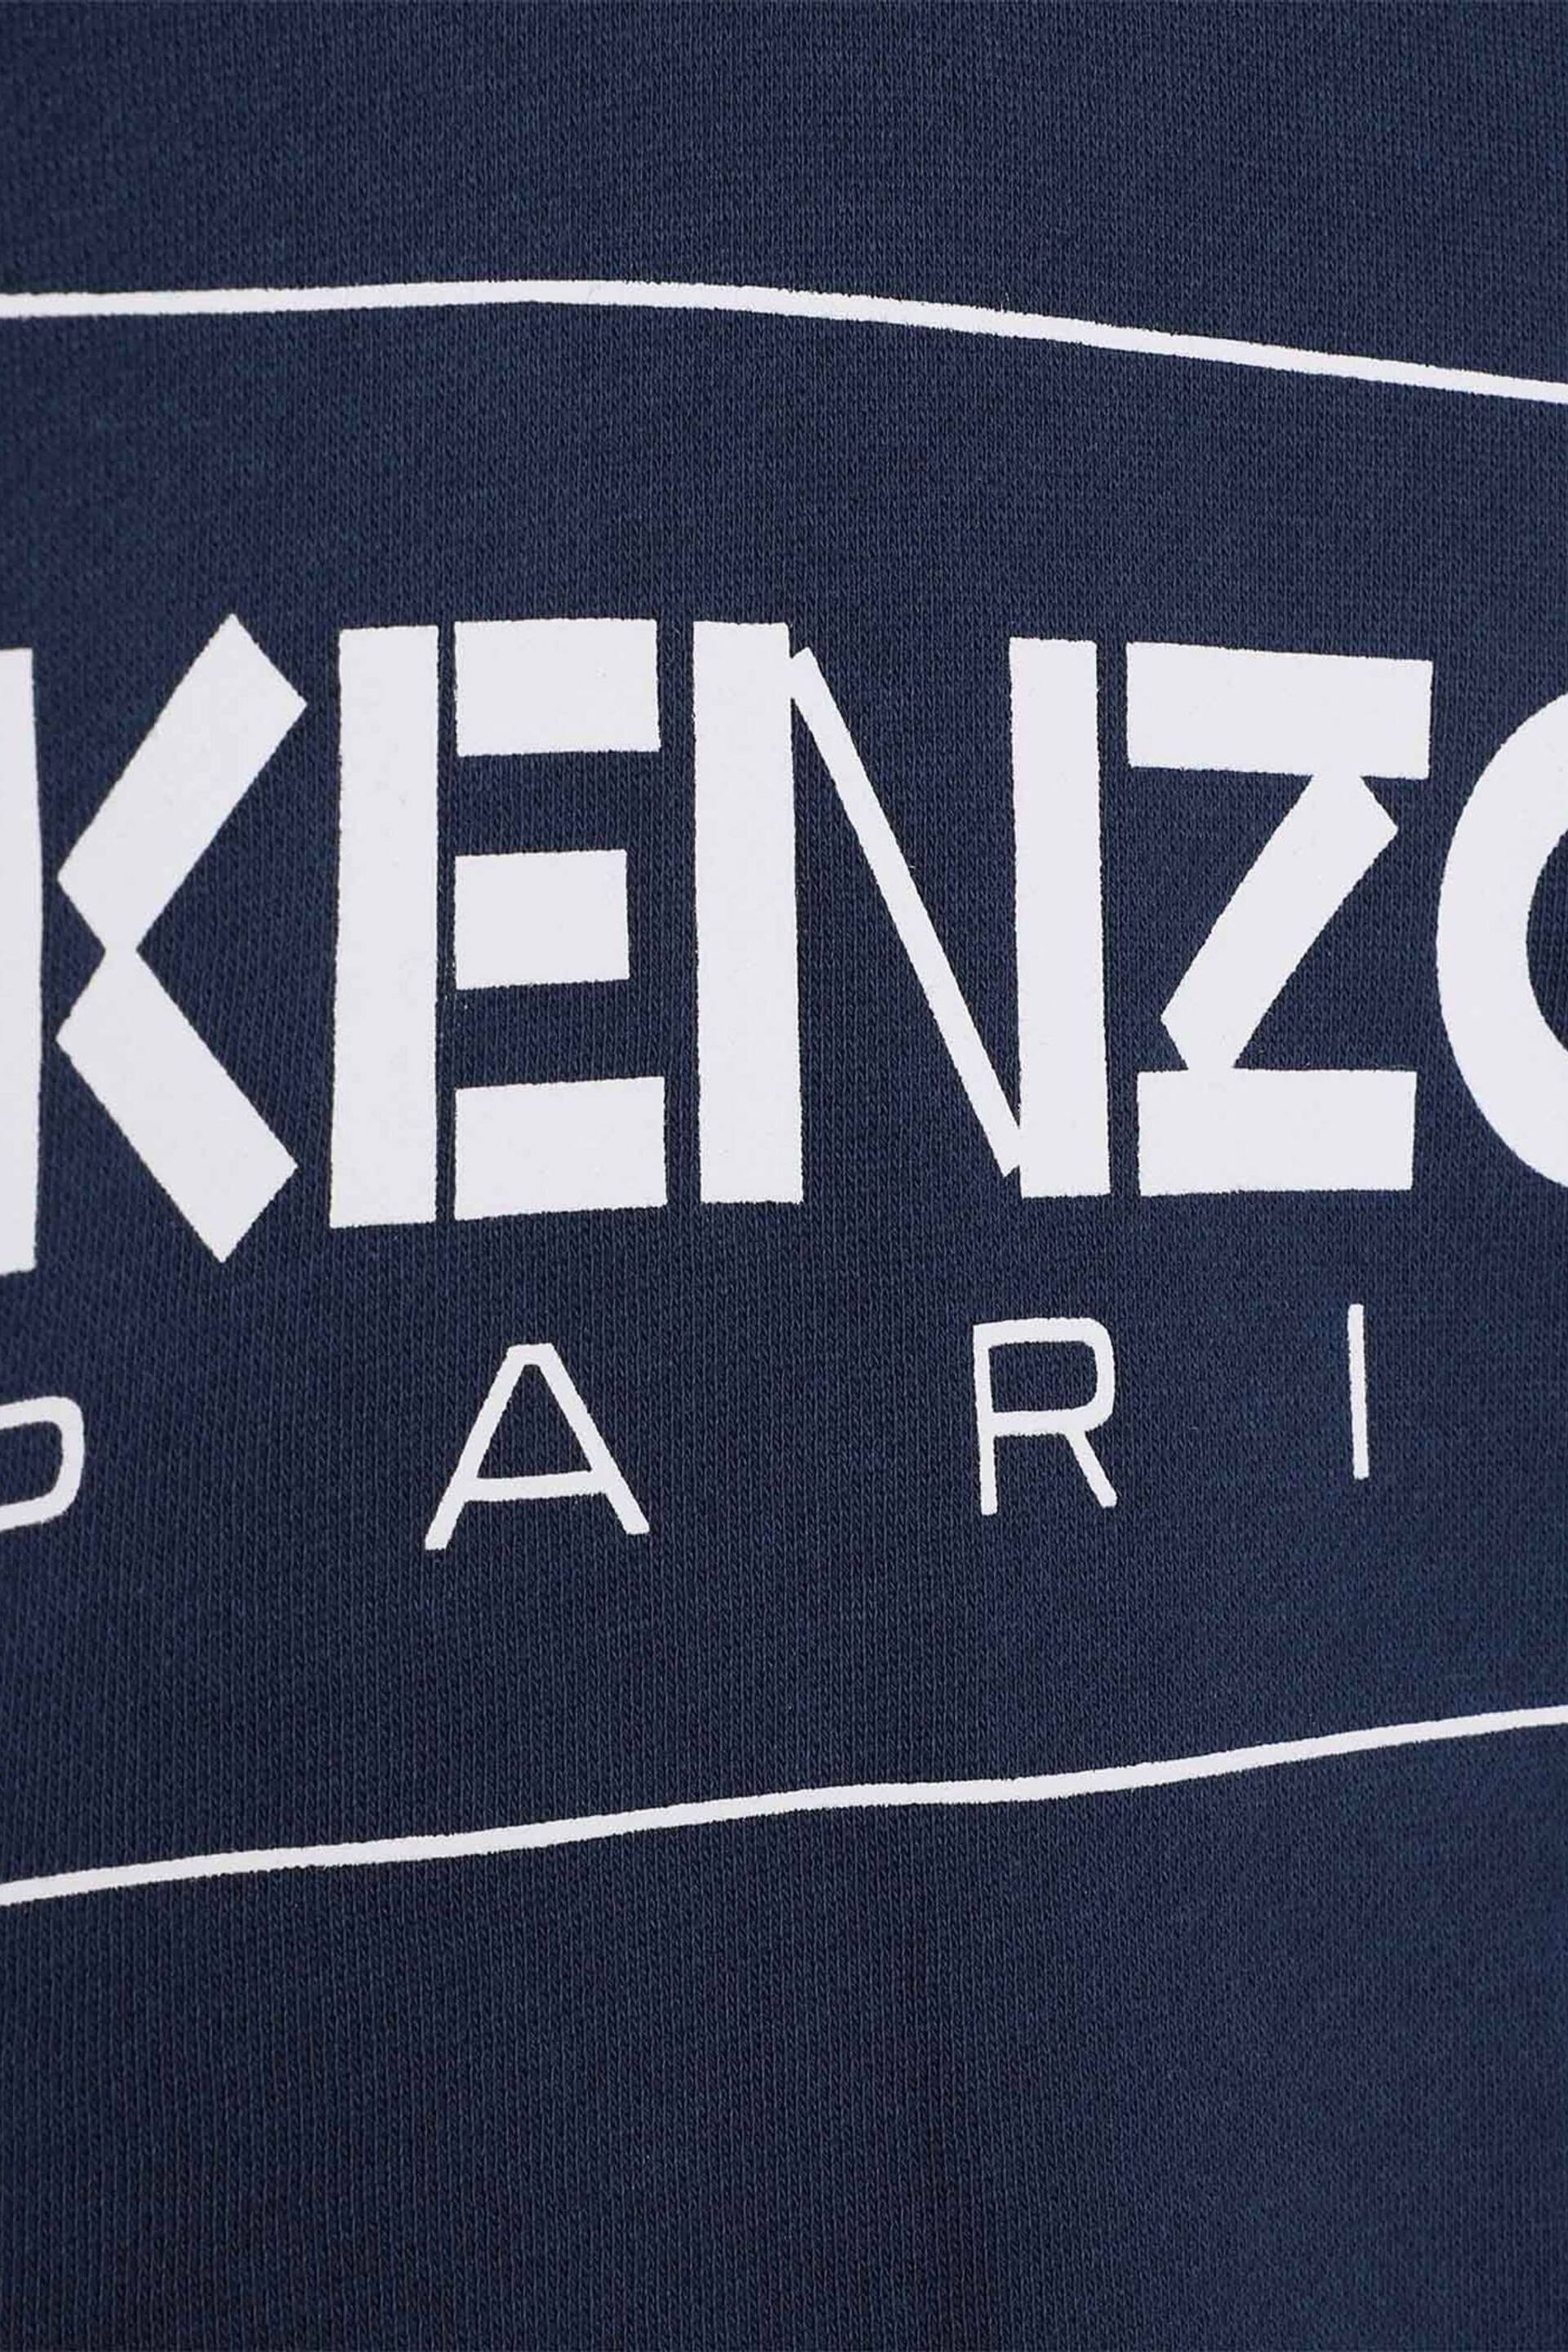 KENZO KIDS Navy Blue Logo Sweatshirt - Image 3 of 3